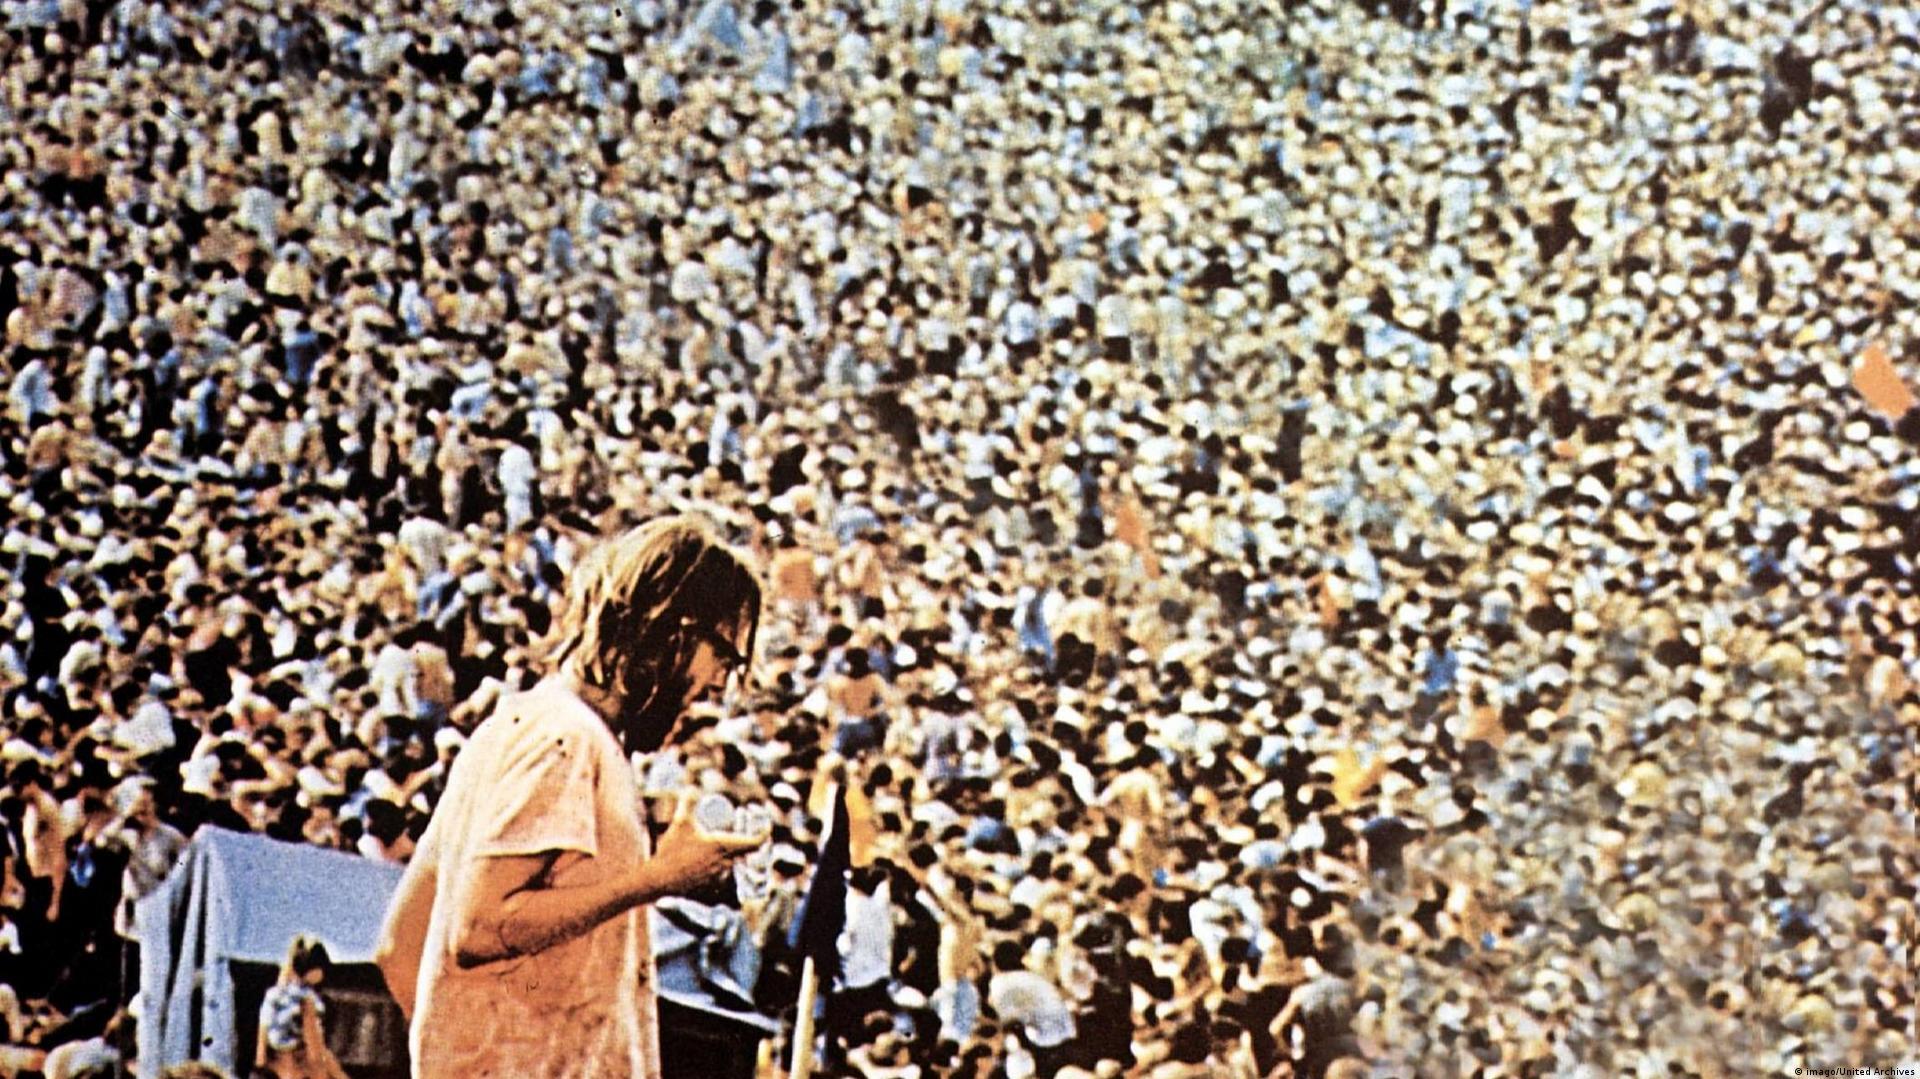 Free download Woodstock A legend despite chaos DW 08132019 [1920x1080 ...